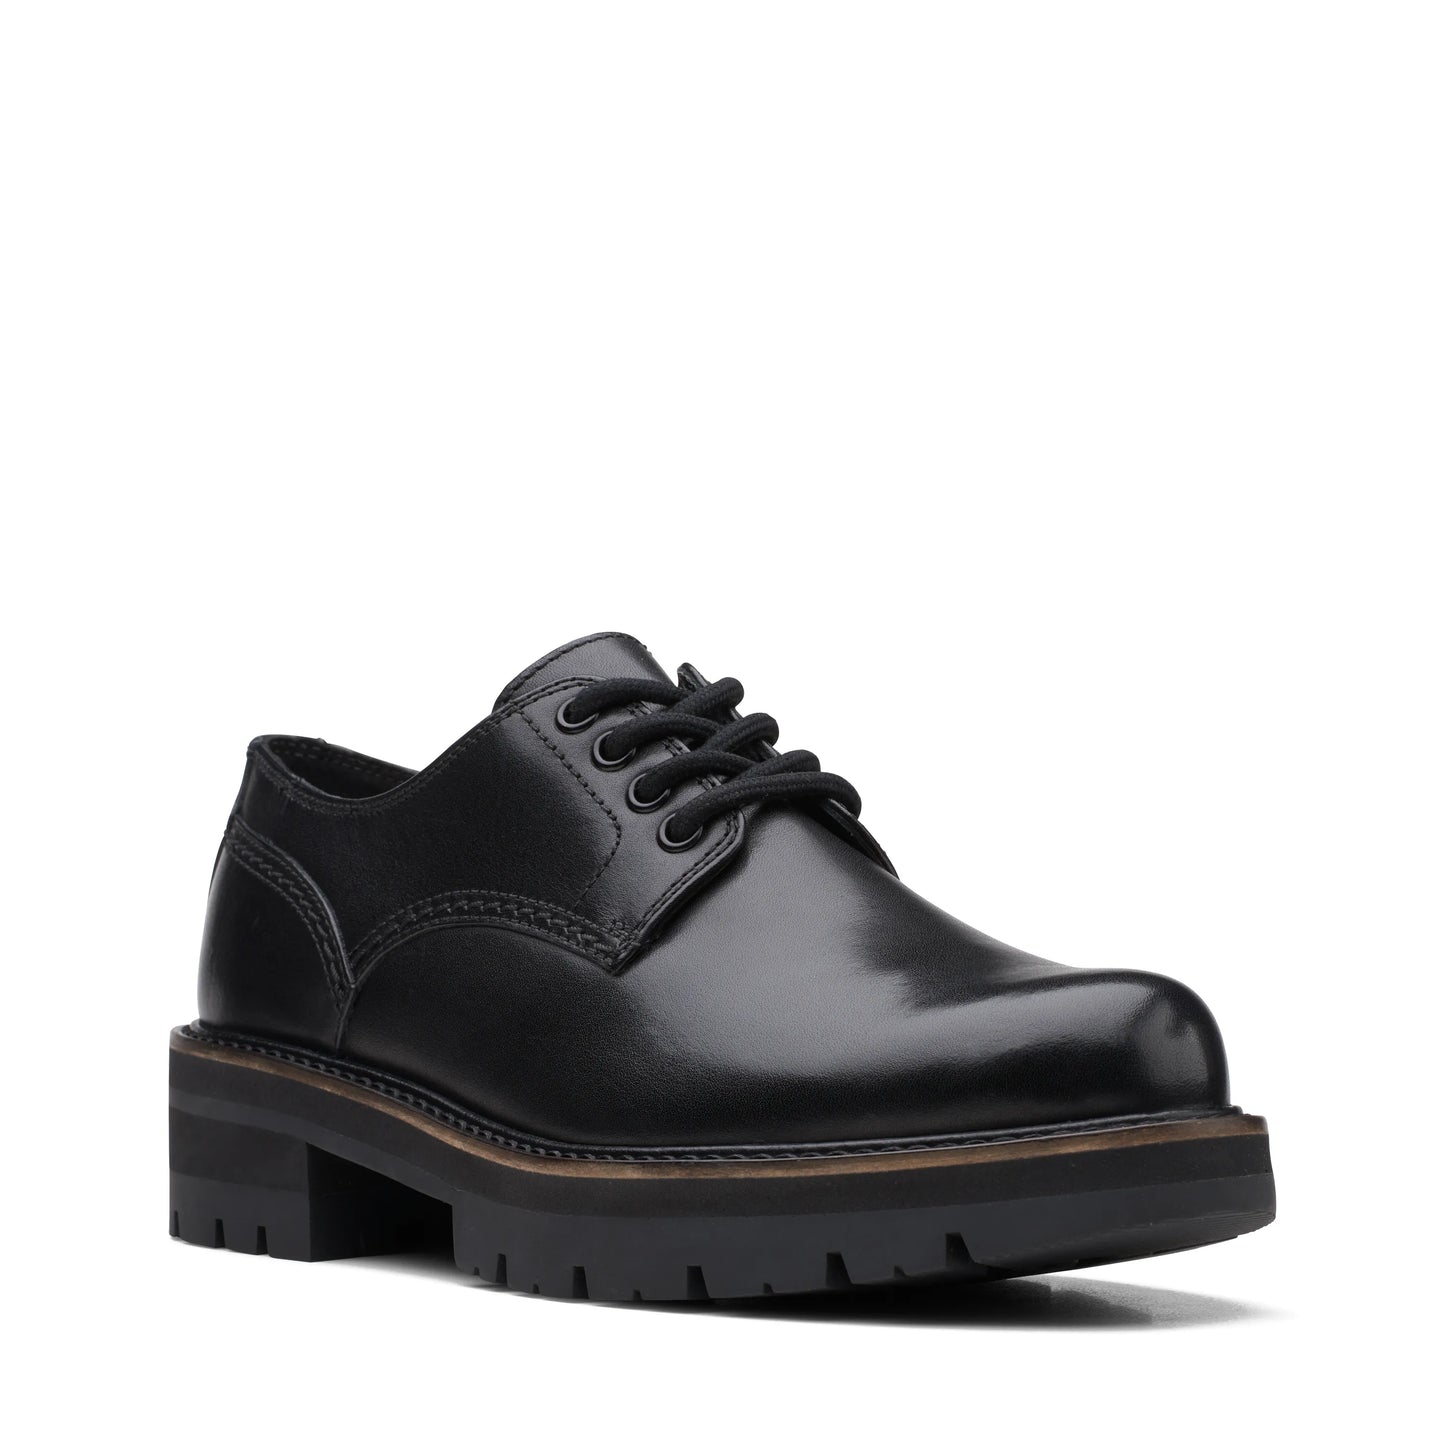 CLARKS | महिलाओं के लिए डर्बी जूते | ORIANNA DERBY BLACK | काला